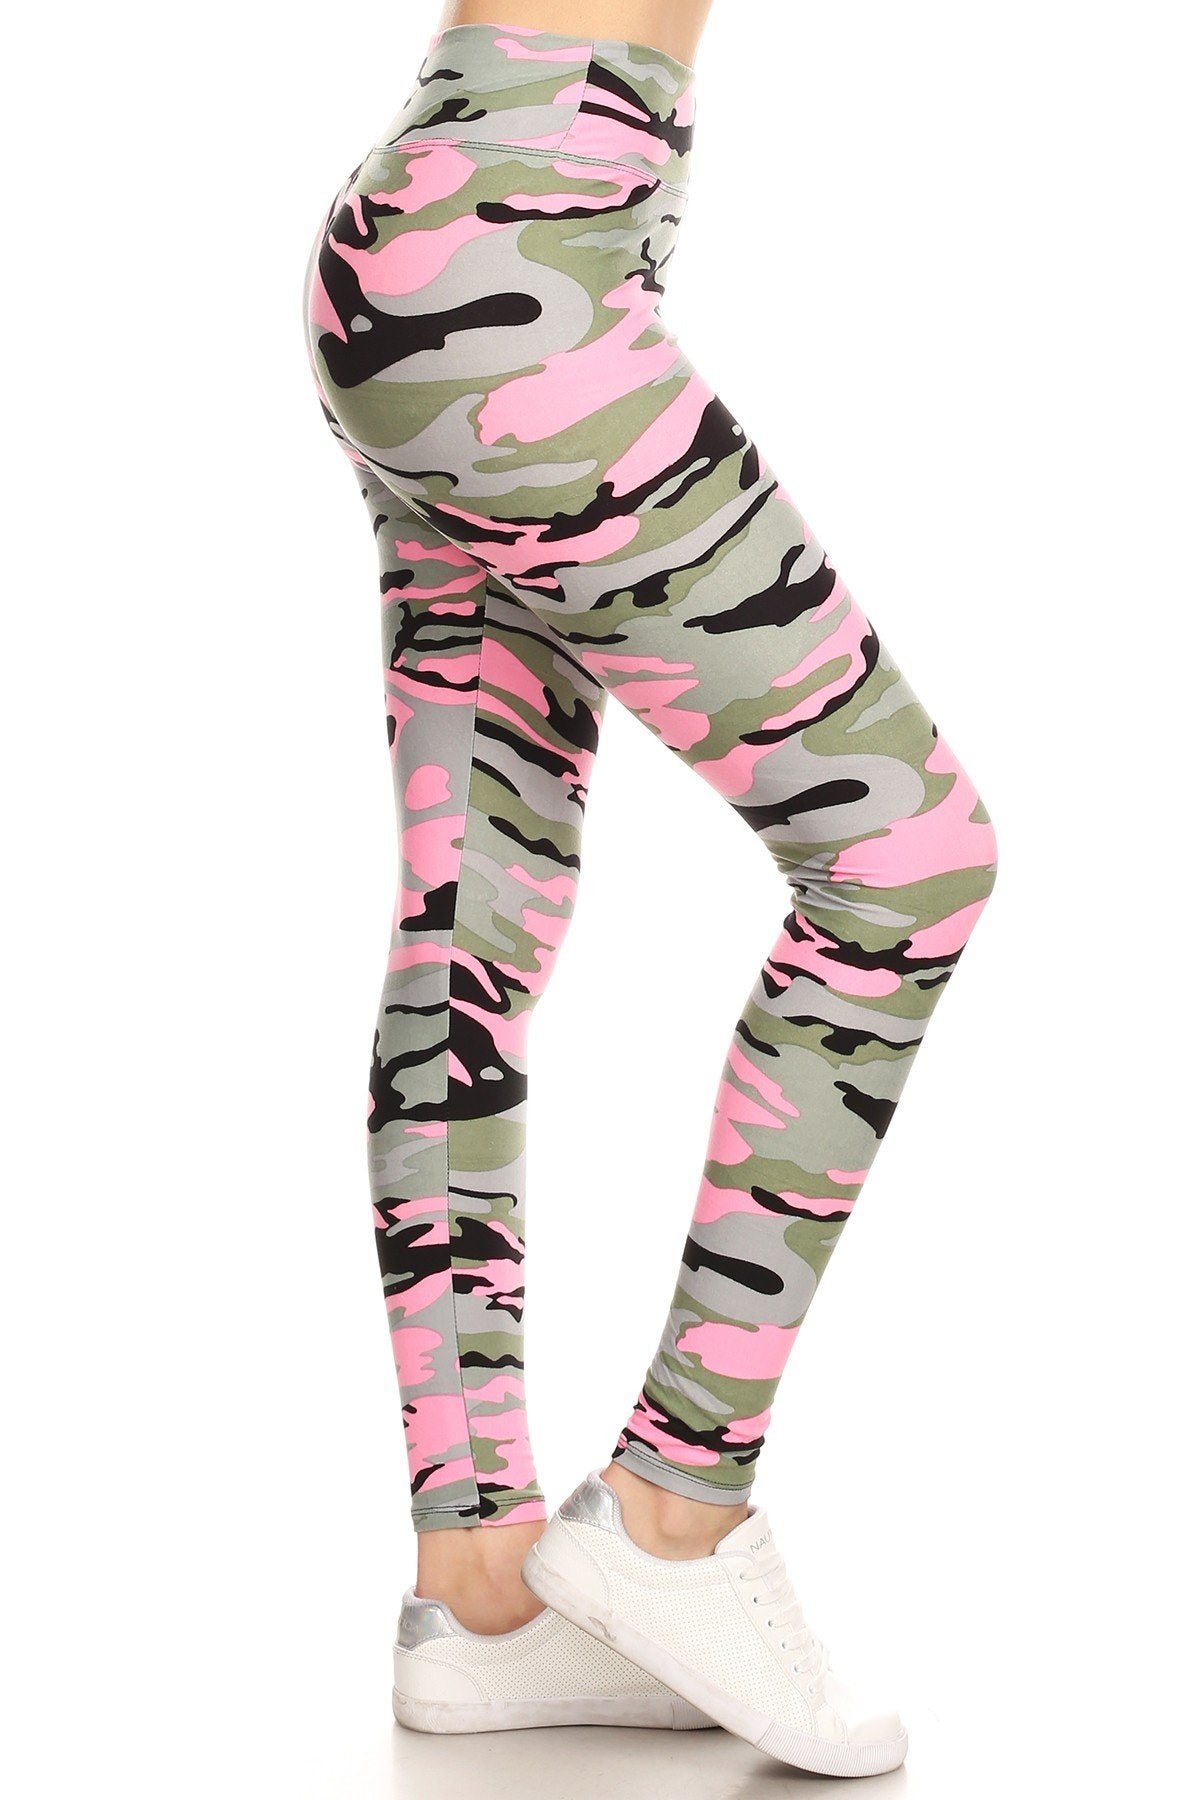 Womens Leggings | Pink Camouflage Leggings | Yoga Pants | Footless Tights |  Yoga Waistband